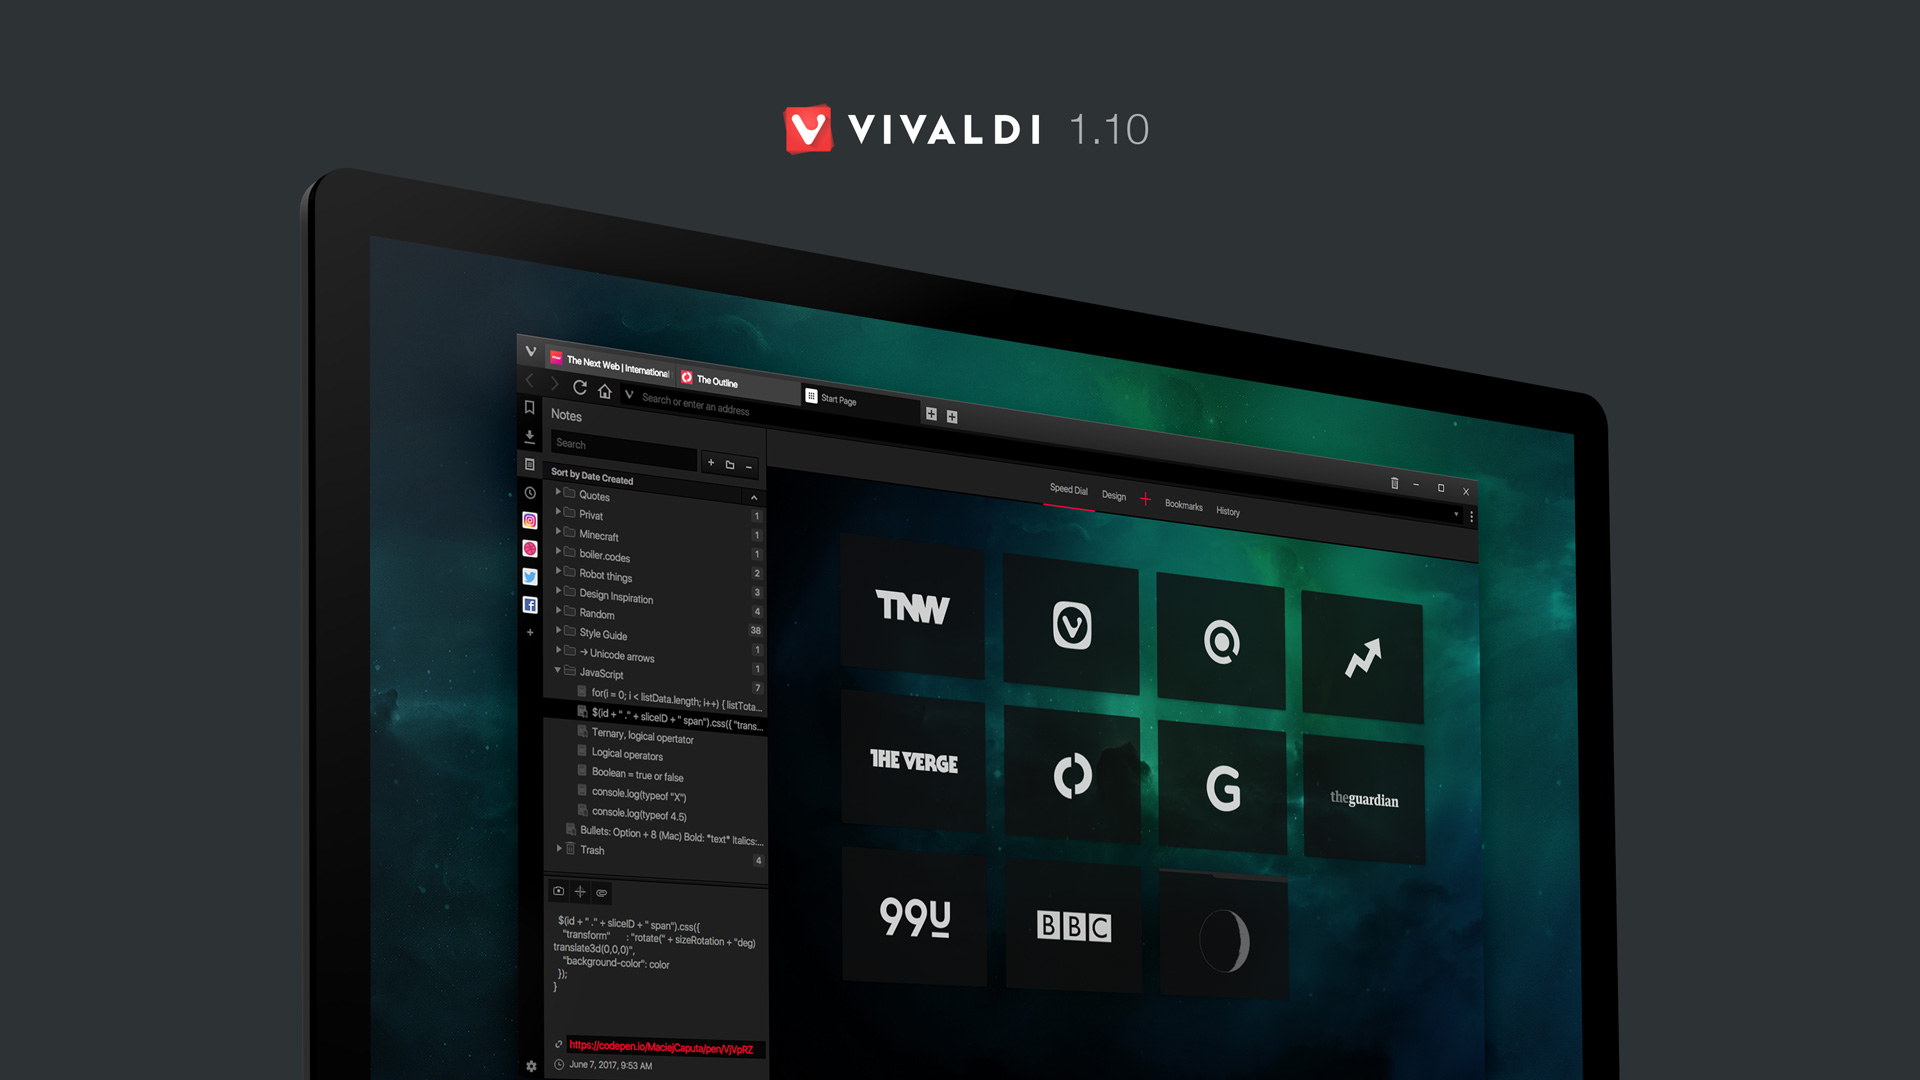 Vivaldi 6.1.3035.84 instal the last version for ios